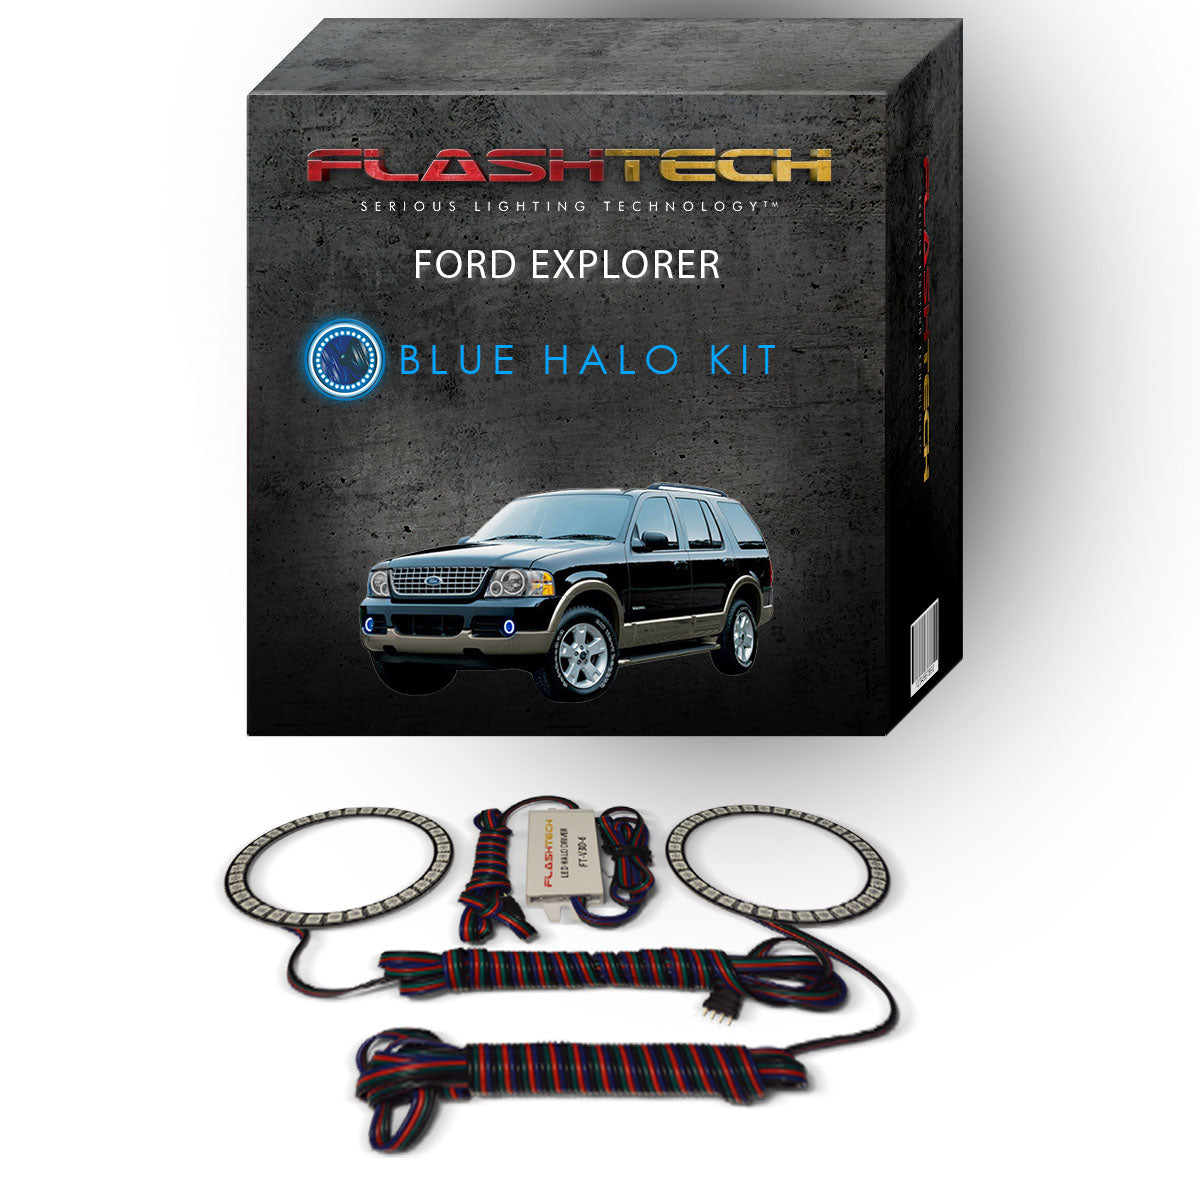 Ford-Explorer-2002, 2003, 2004, 2005-LED-Halo-Fog Lights-RGB-Bluetooth RF Remote-FO-EX0205-V3FBTRF